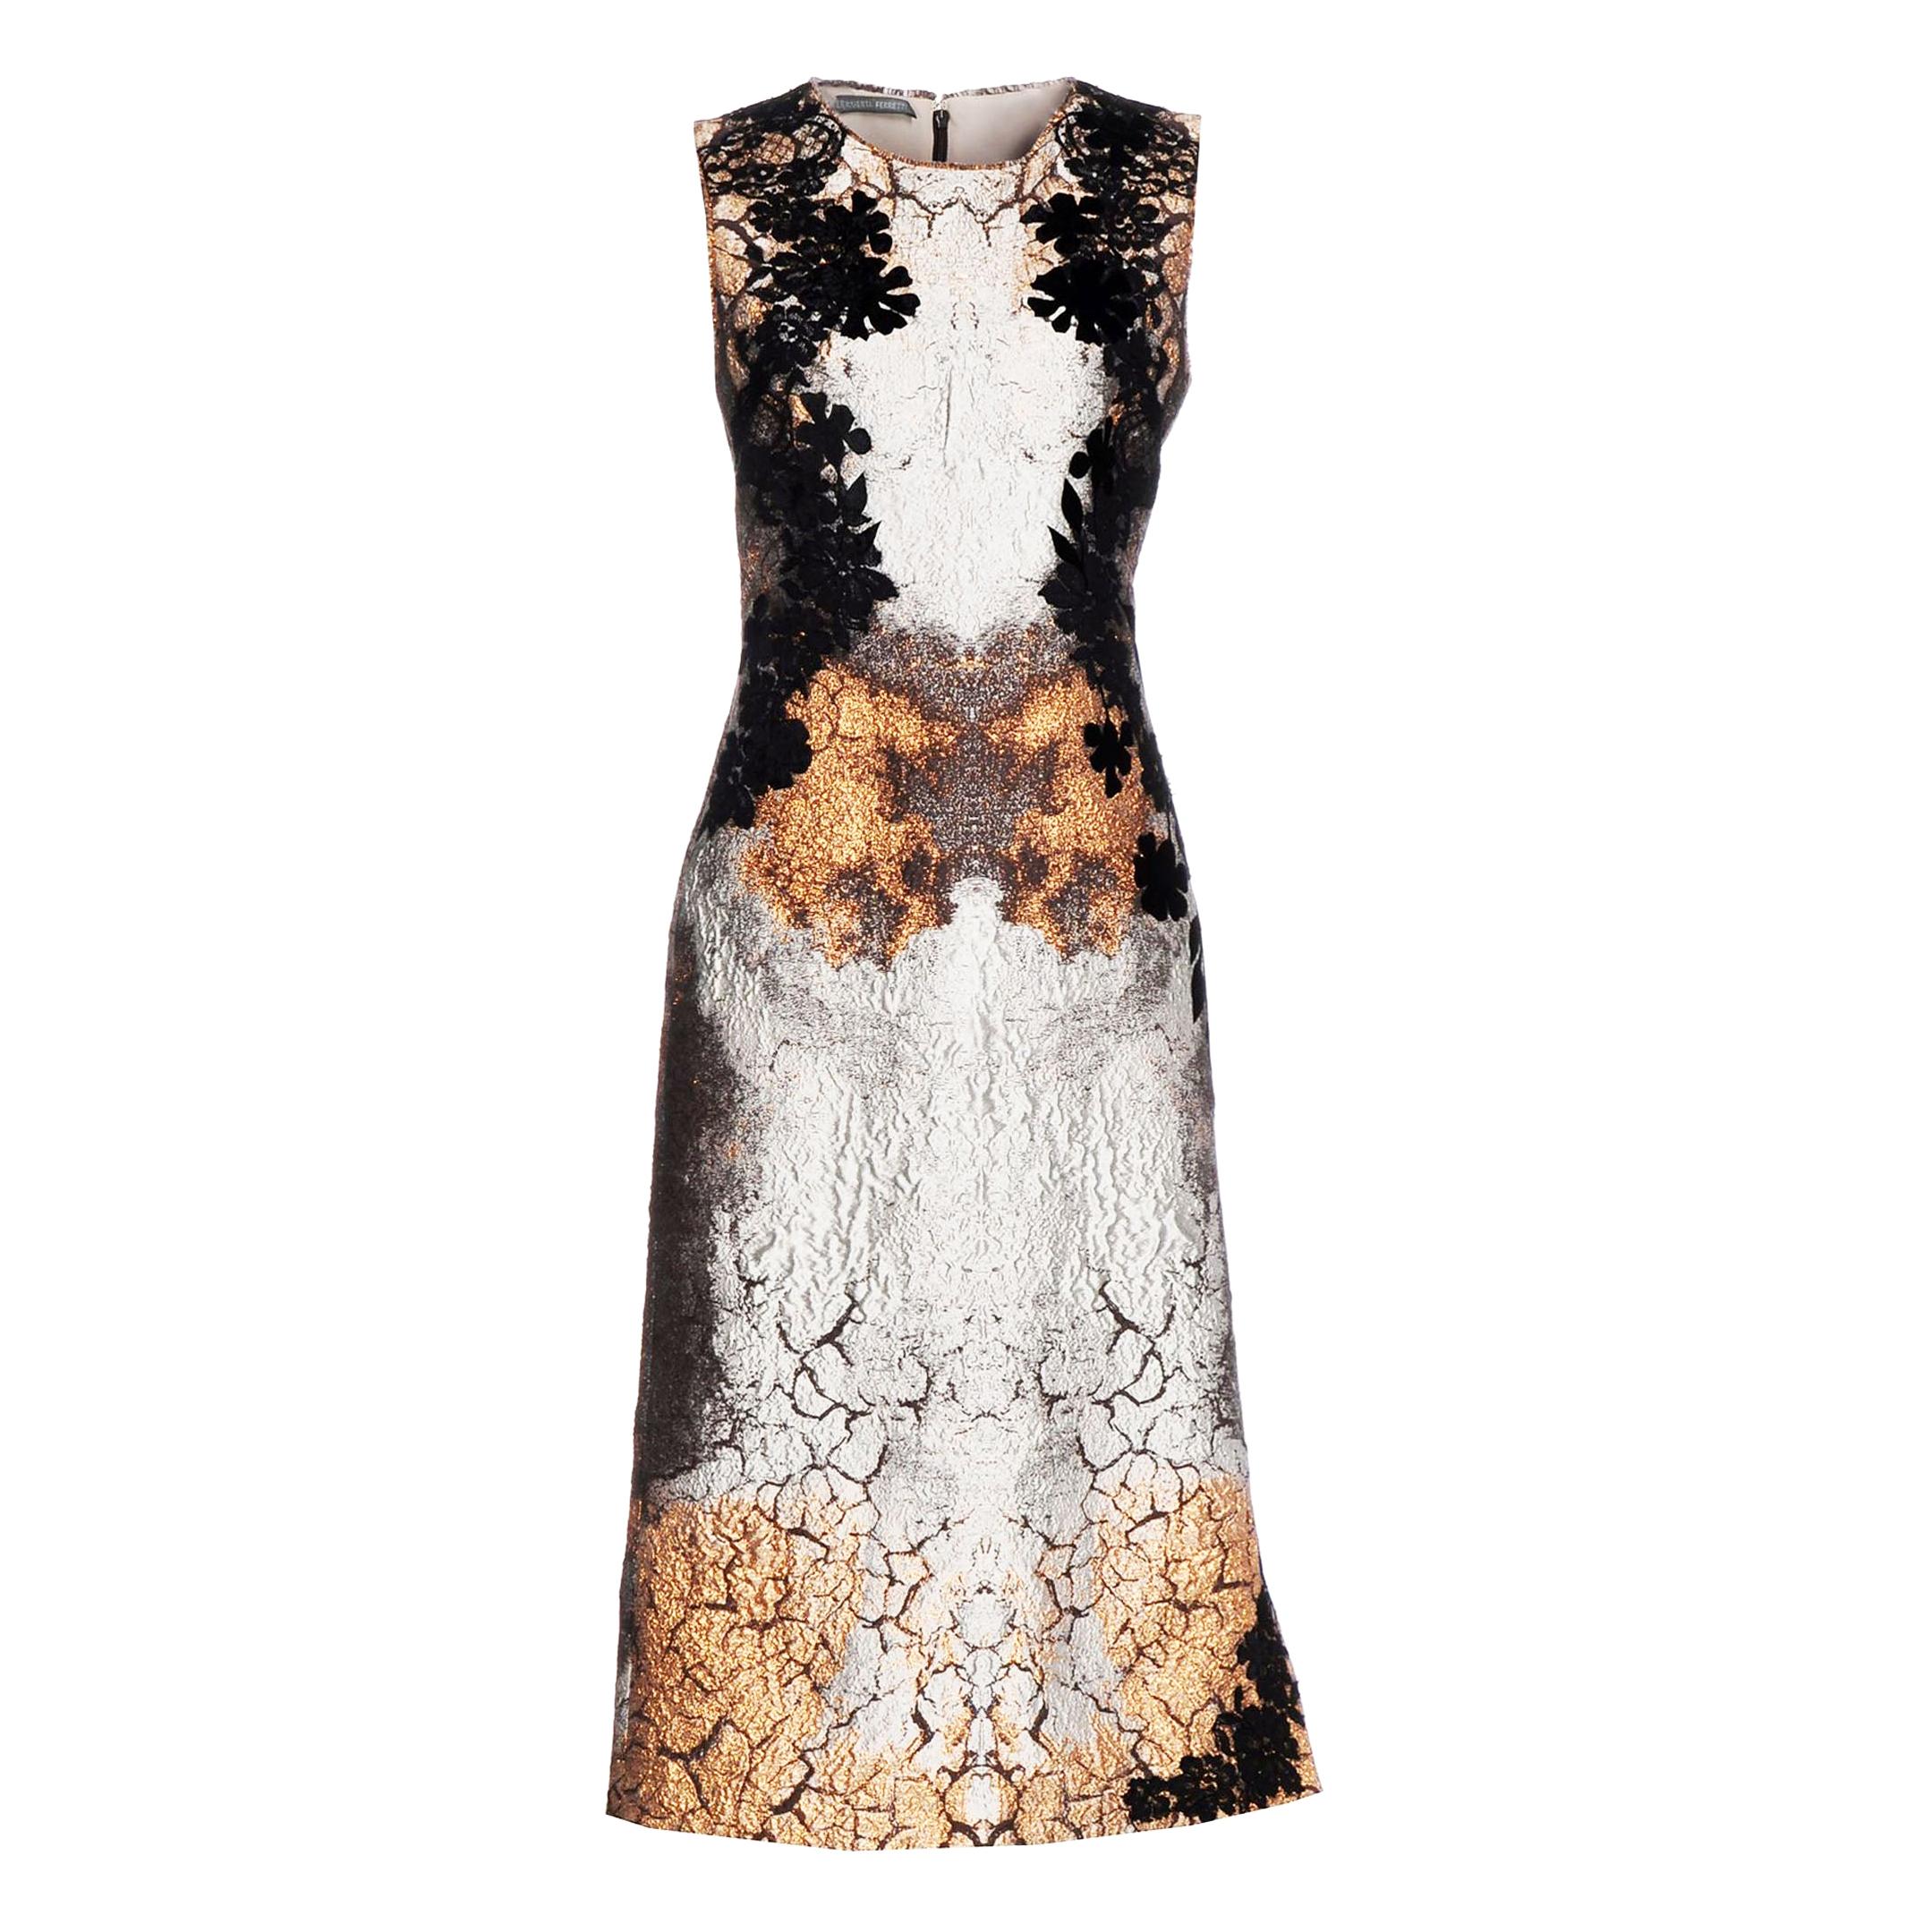 New Alberta Ferretti Bronze Metallic Jacquard Dress with Application It. 44 US 8 For Sale